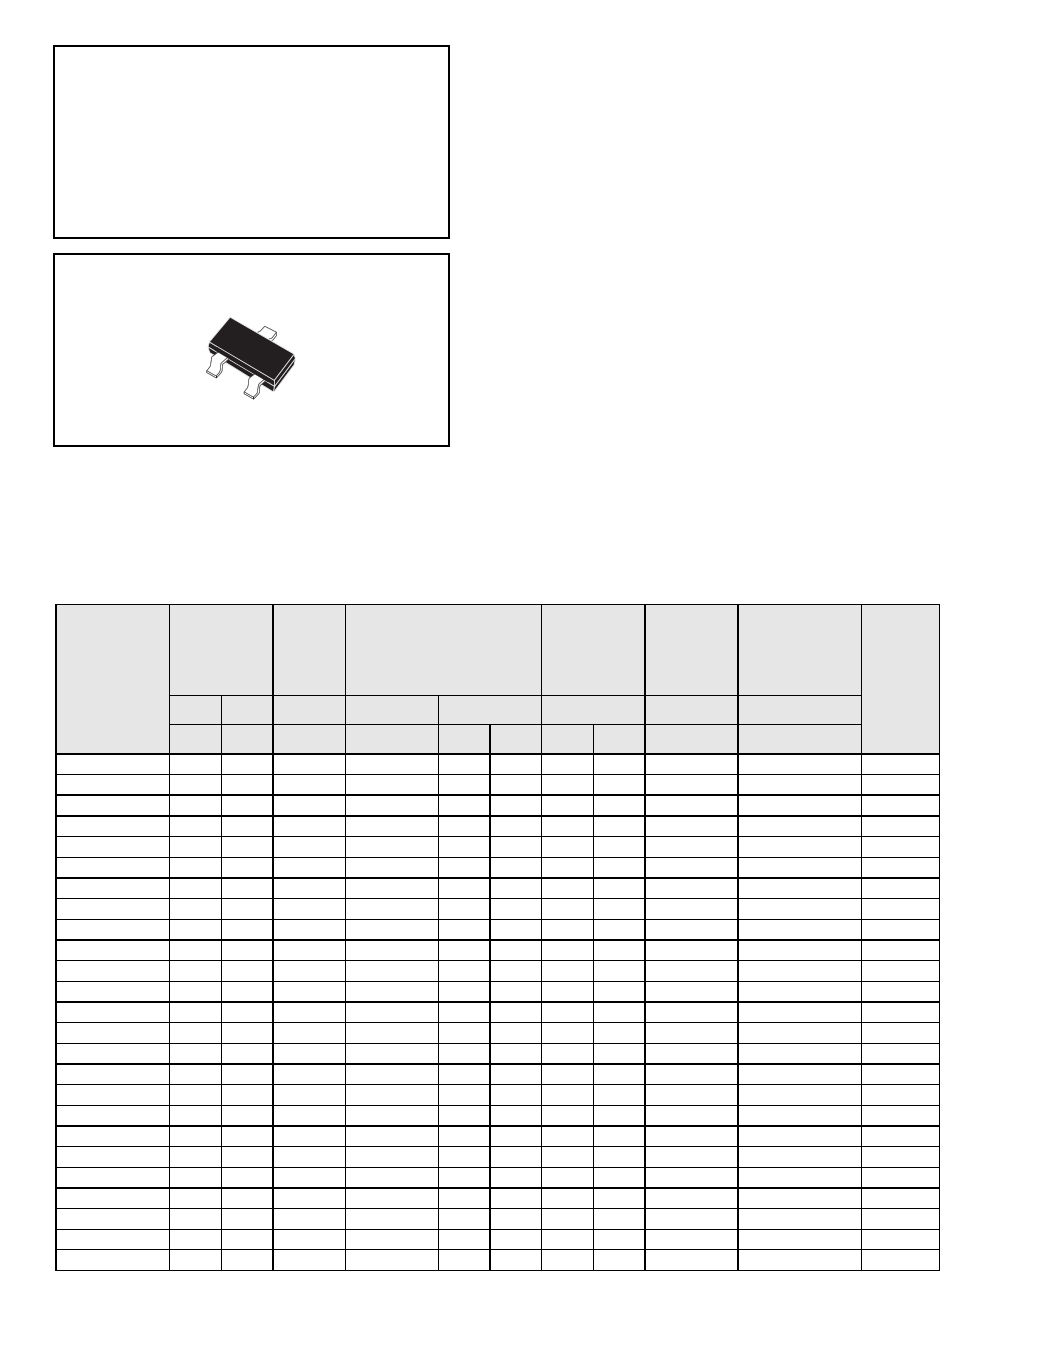 BZX84C3V9 datasheet, circuit